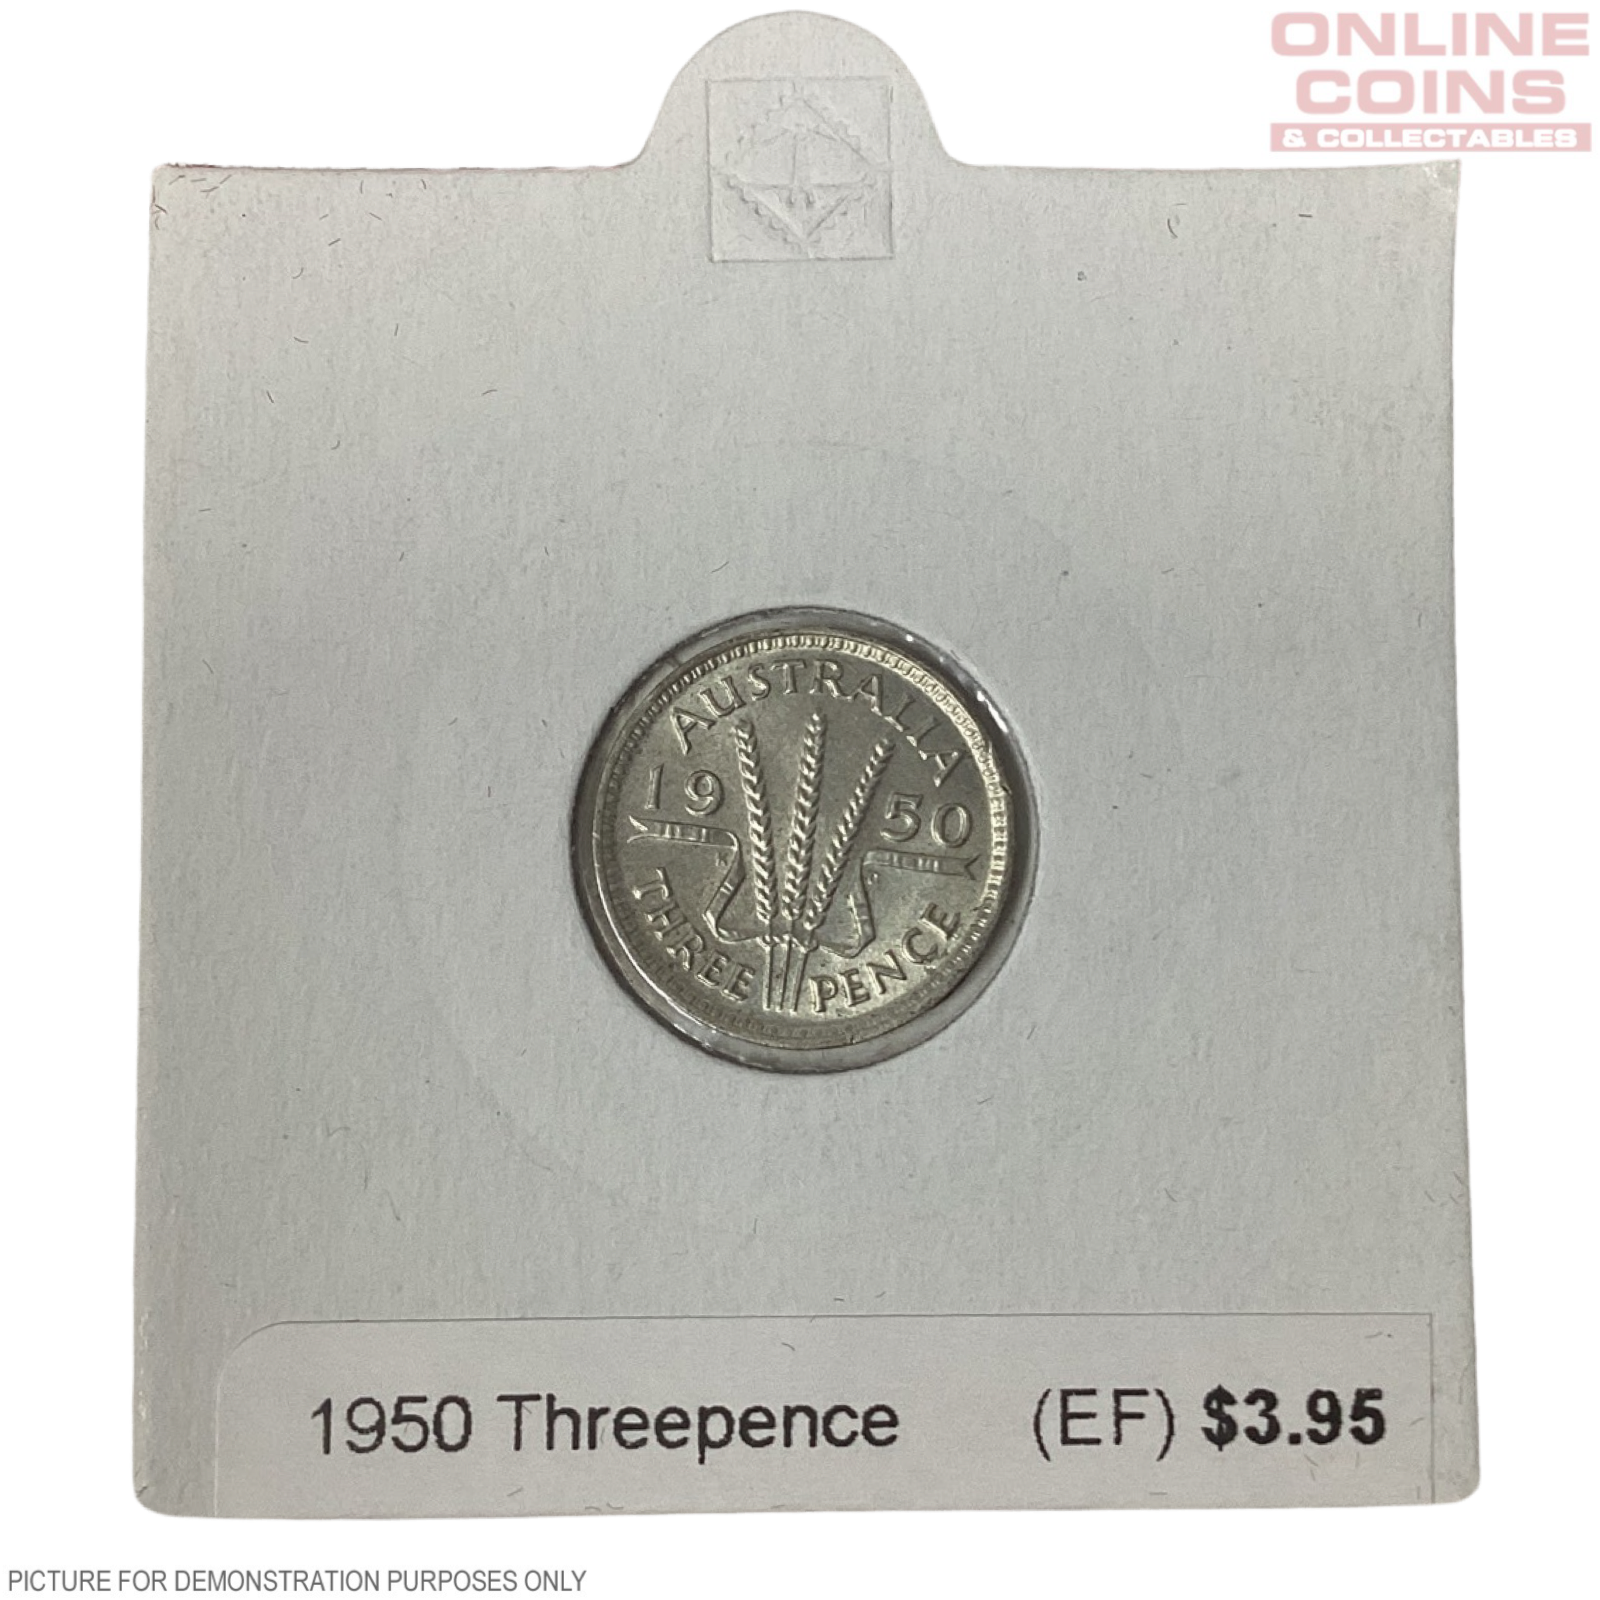 1950 Threepence (EF) loose in 2x2